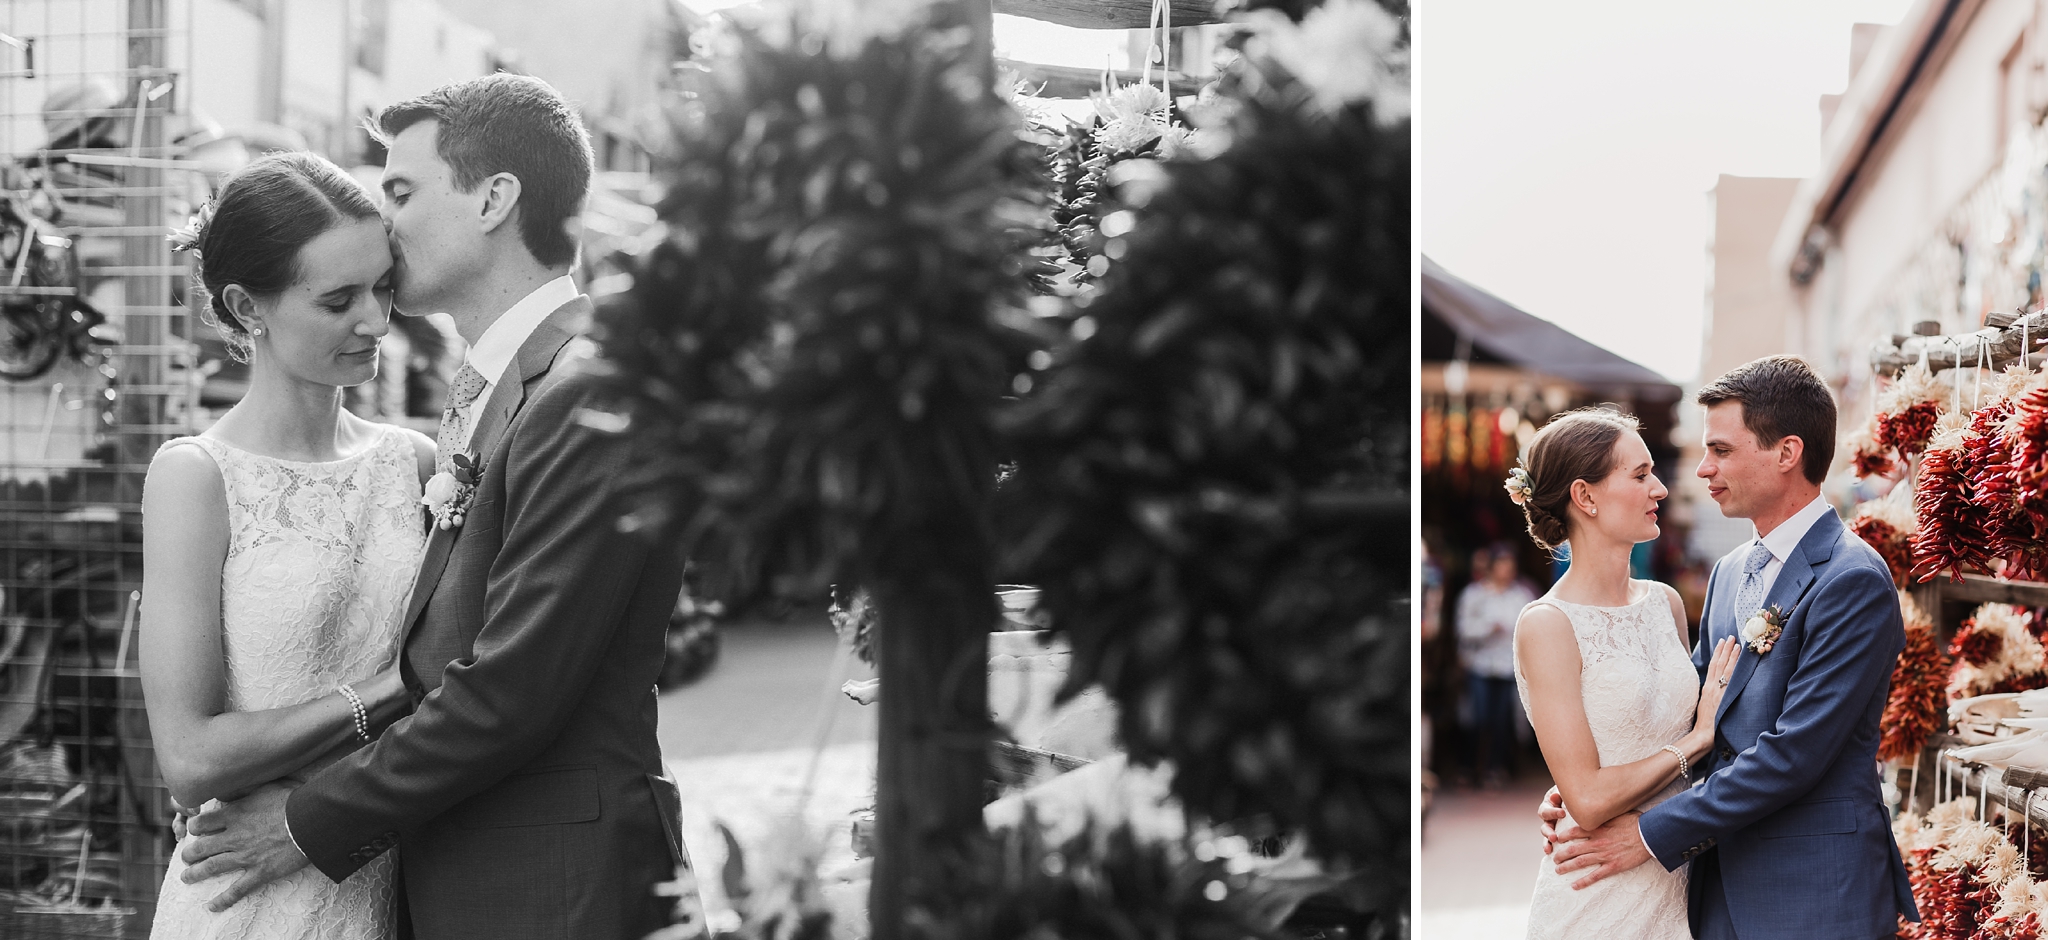 Alicia+lucia+photography+-+albuquerque+wedding+photographer+-+santa+fe+wedding+photography+-+new+mexico+wedding+photographer+-+new+mexico+wedding+-+santa+fe+wedding+-+la+fonda+on+the+plaza+wedding+-+jewish+wedding_0108.jpg